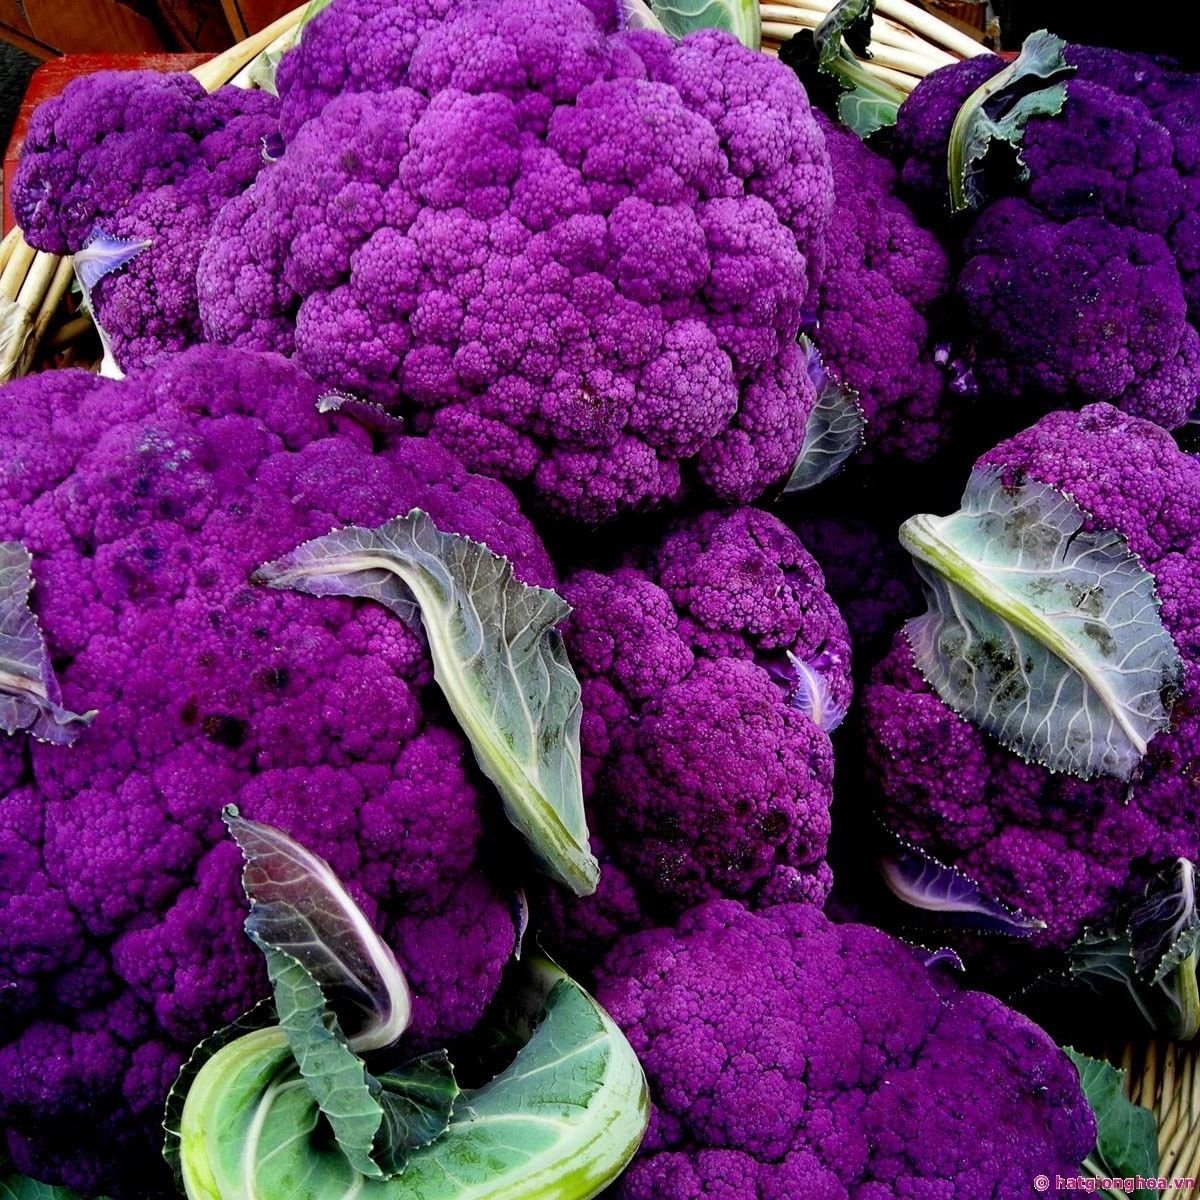 100 Purple Broccoli Seeds, Purple Sprouting Broccoli, Heirloom Non-Gmo Seeds, 100ct